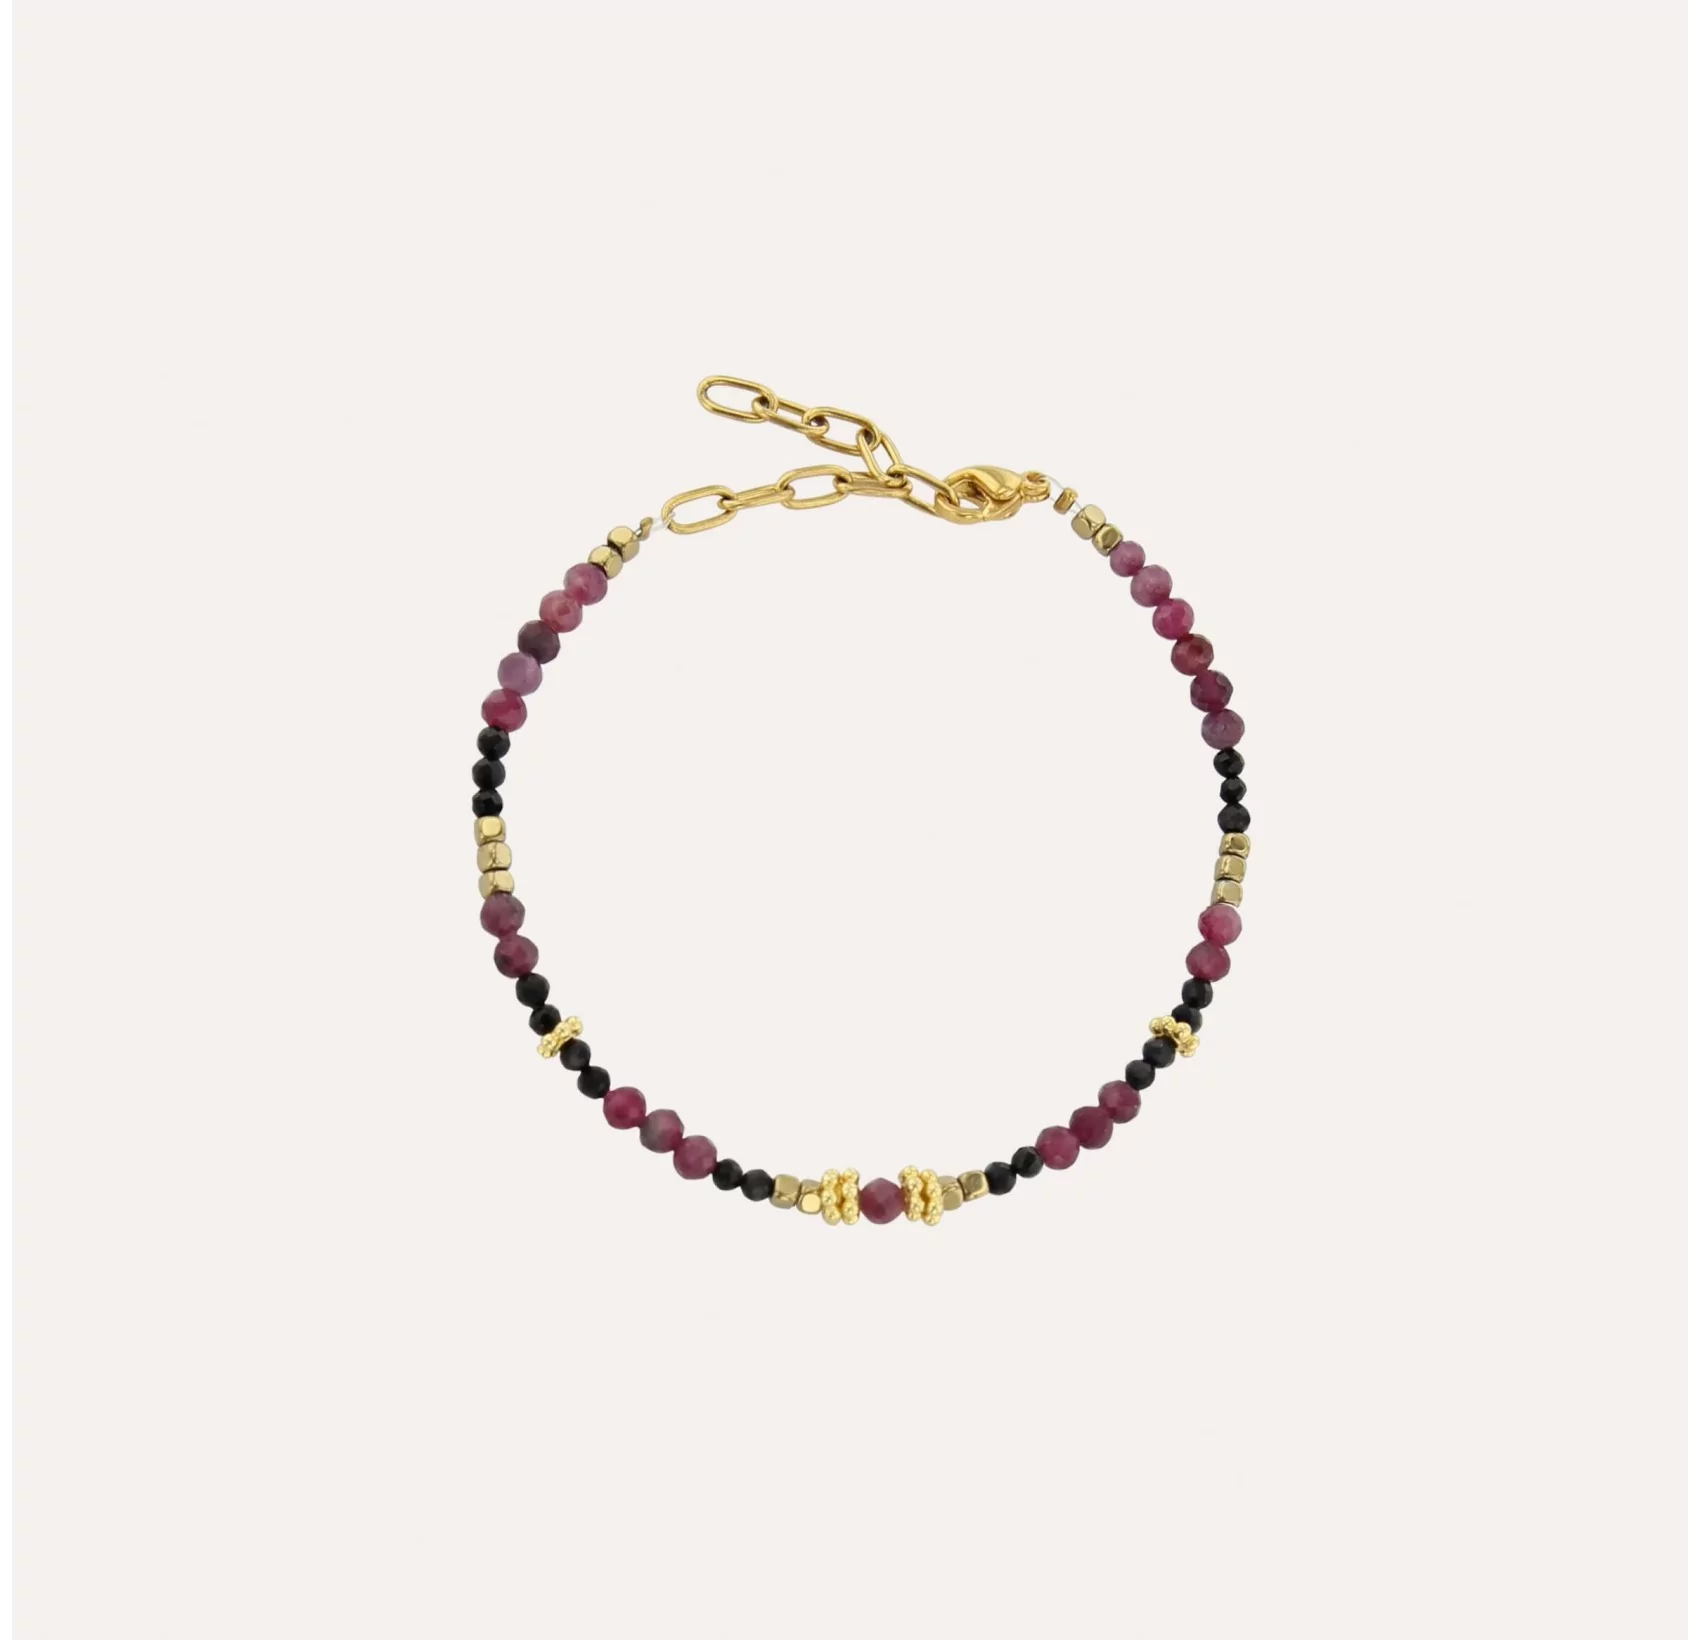 OSIRIS bracelet in rubellite and black spinel |Gloria Balensi